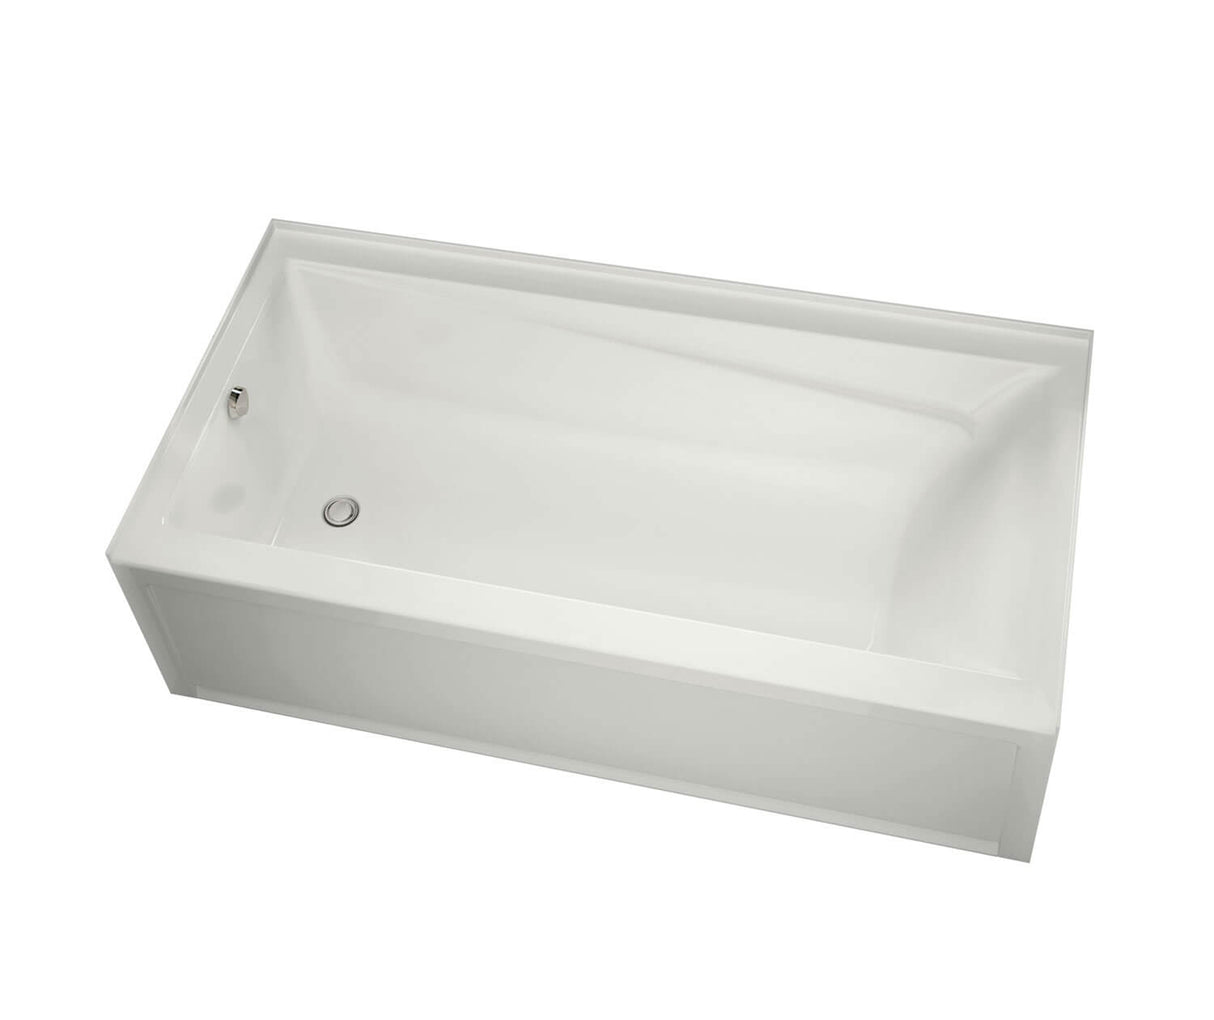 MAAX 106187-L-103-001 Exhibit 7242 IFS Acrylic Alcove Left-Hand Drain Aeroeffect Bathtub in White